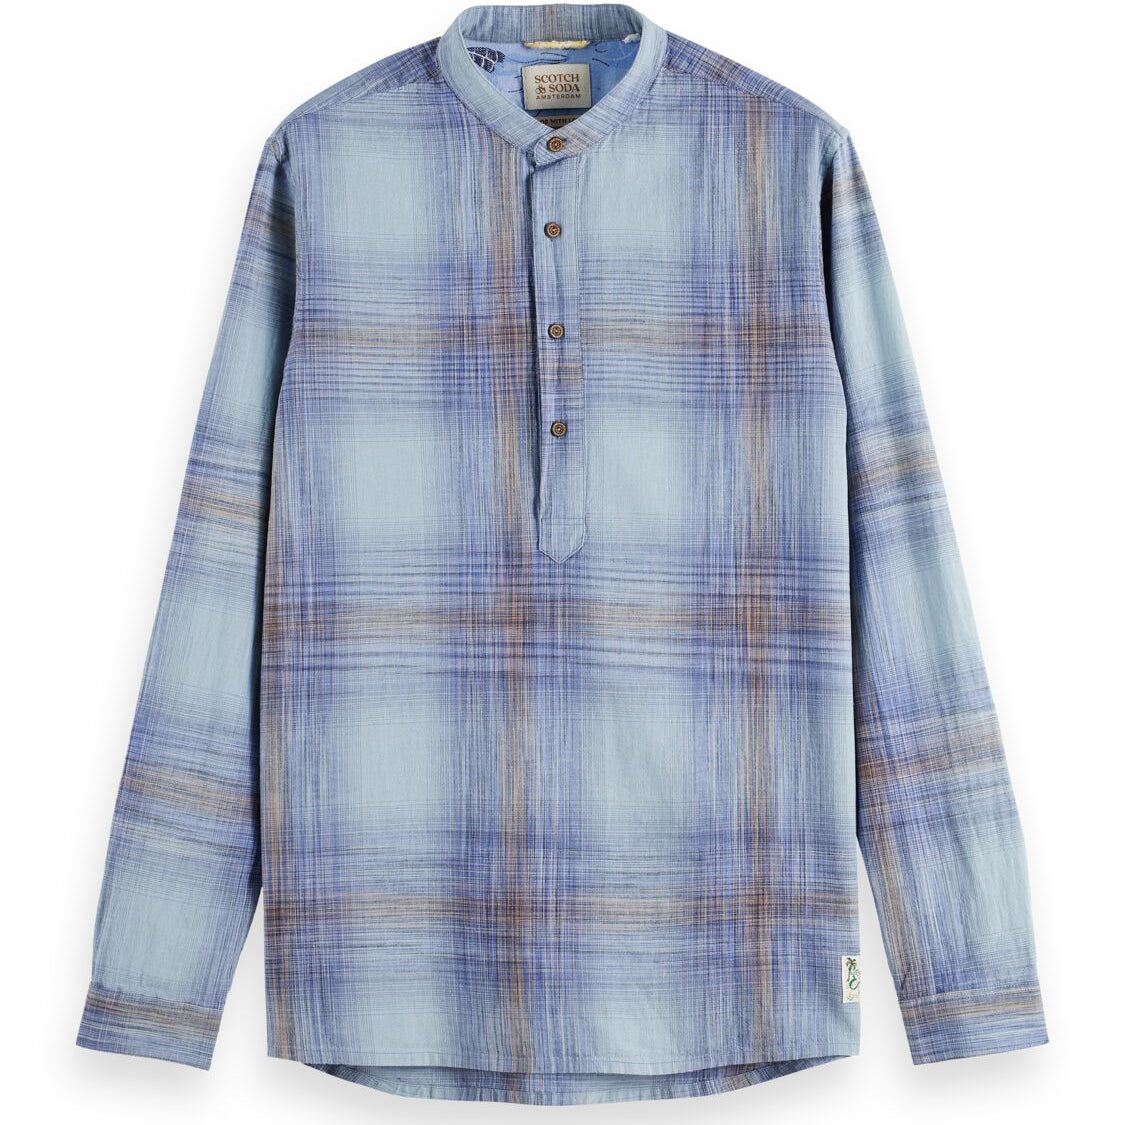 Scotch & Soda Kaftan In Checks & Stripes - Light Blue - 1 - Tops - Long sleeve shirt